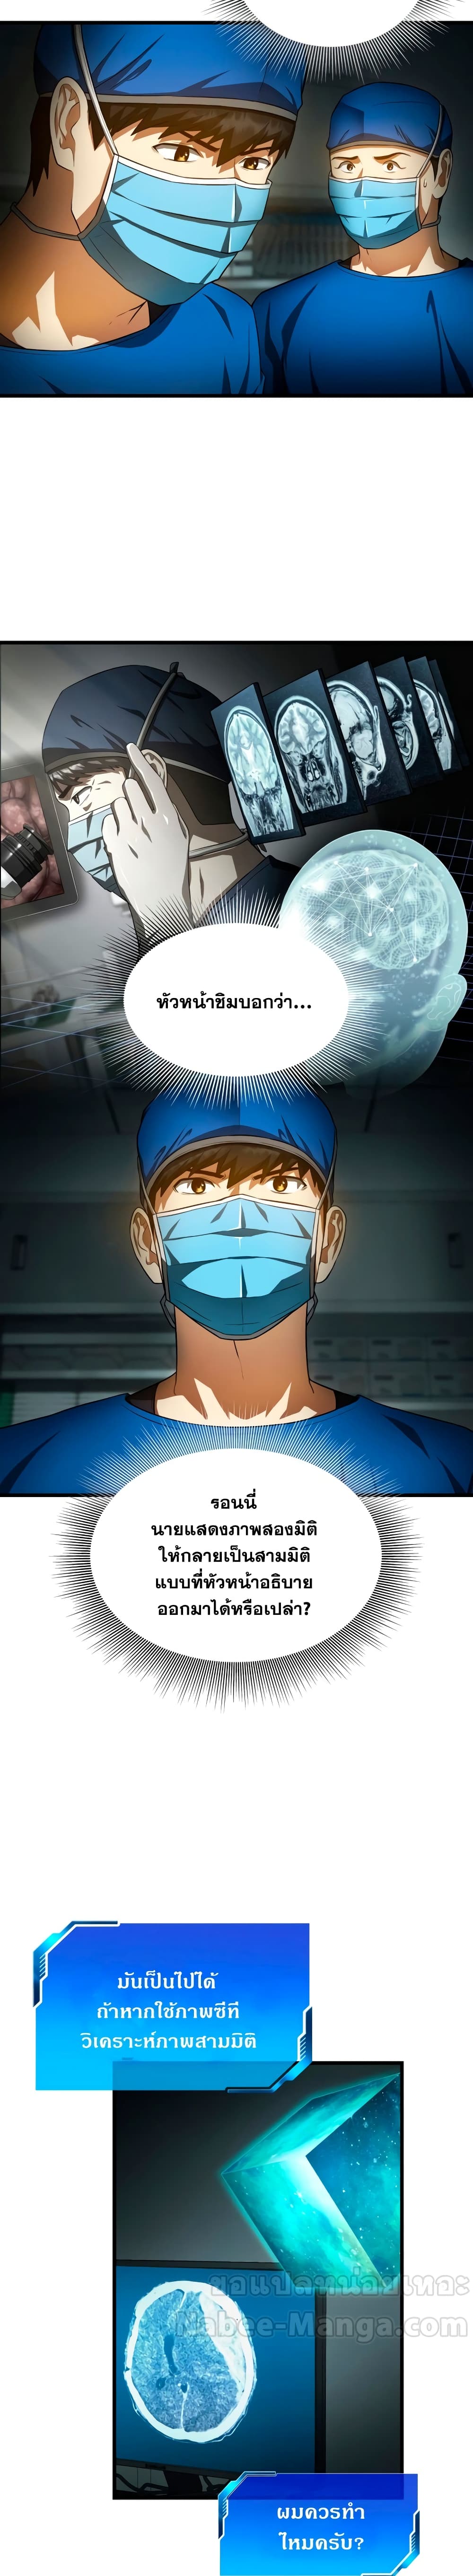 Perfect-Surgeon--21-8.jpg